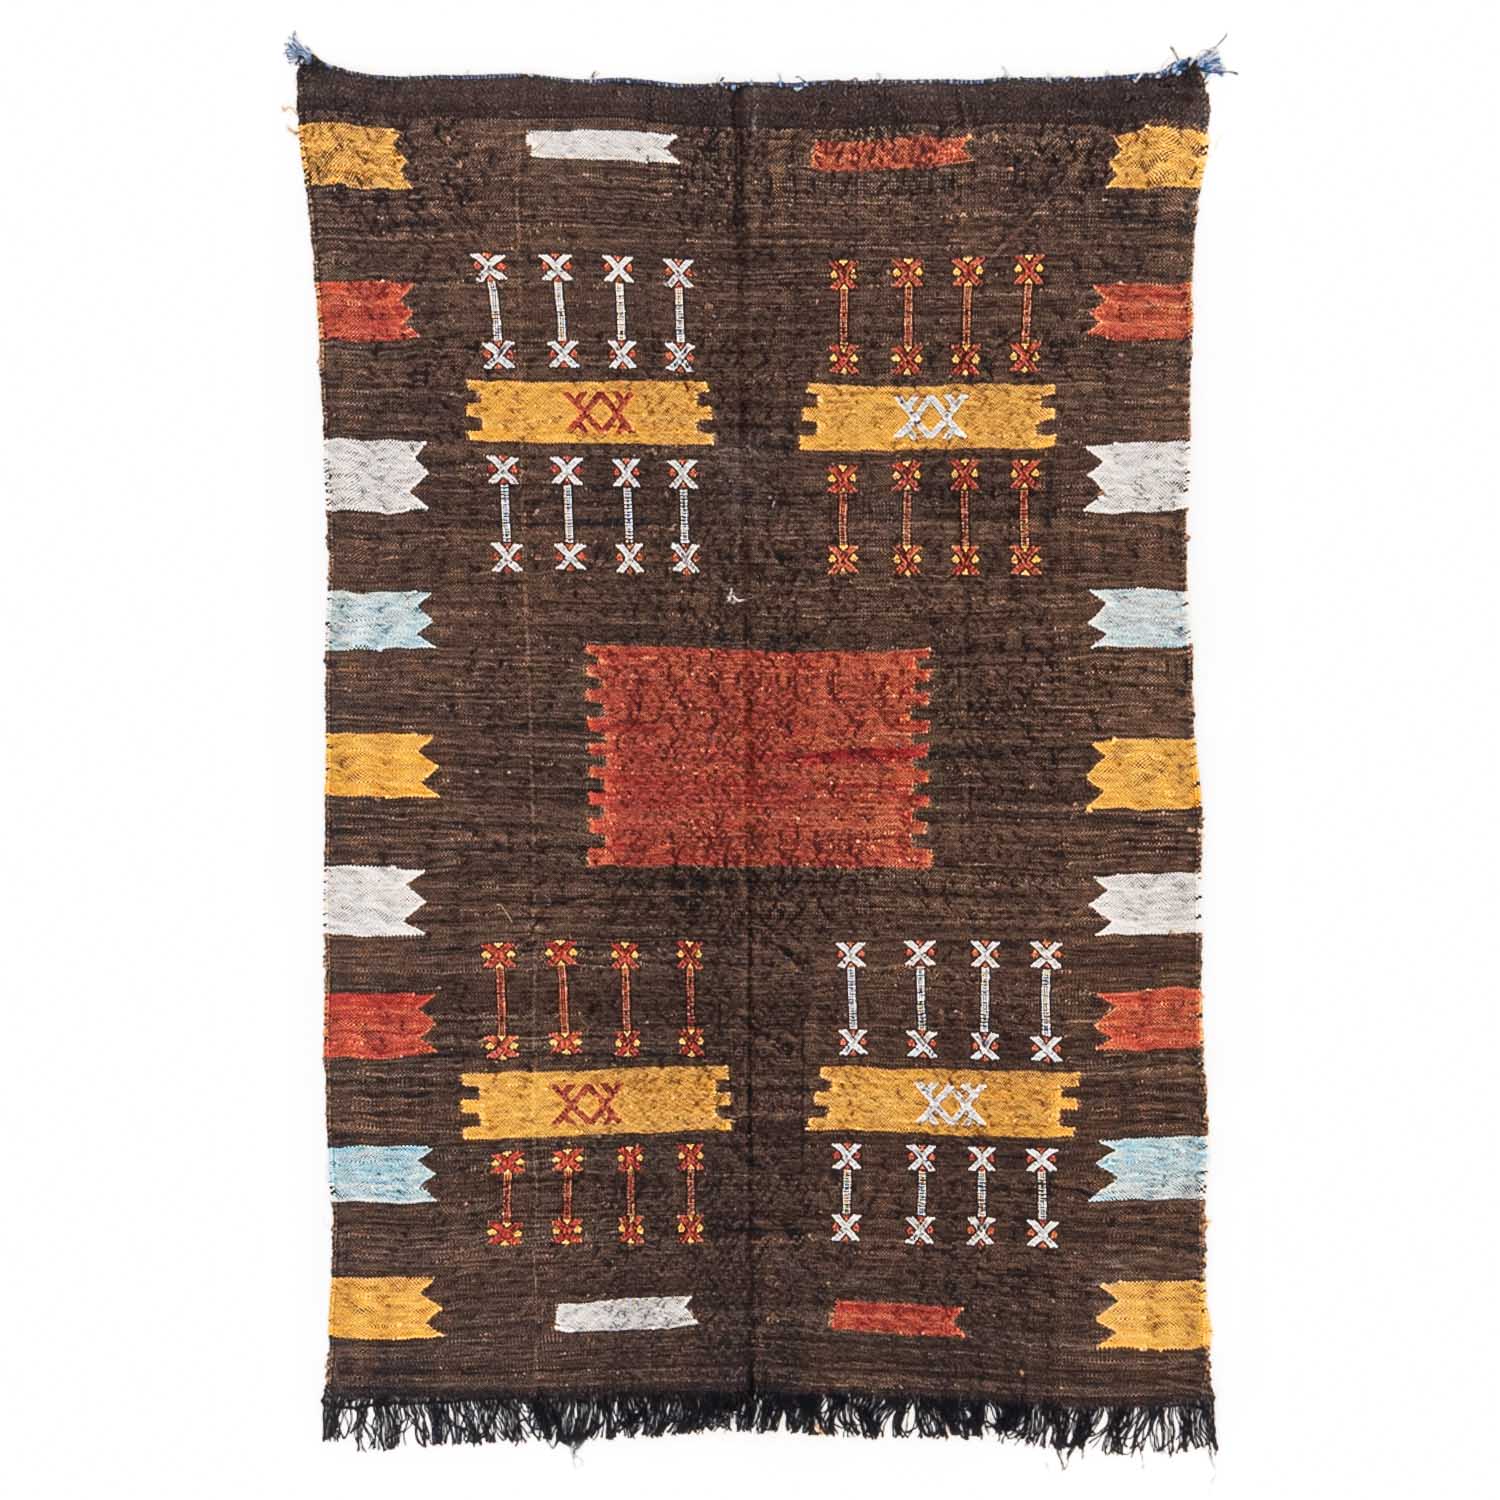 Sifal - Vegan Moroccan rug